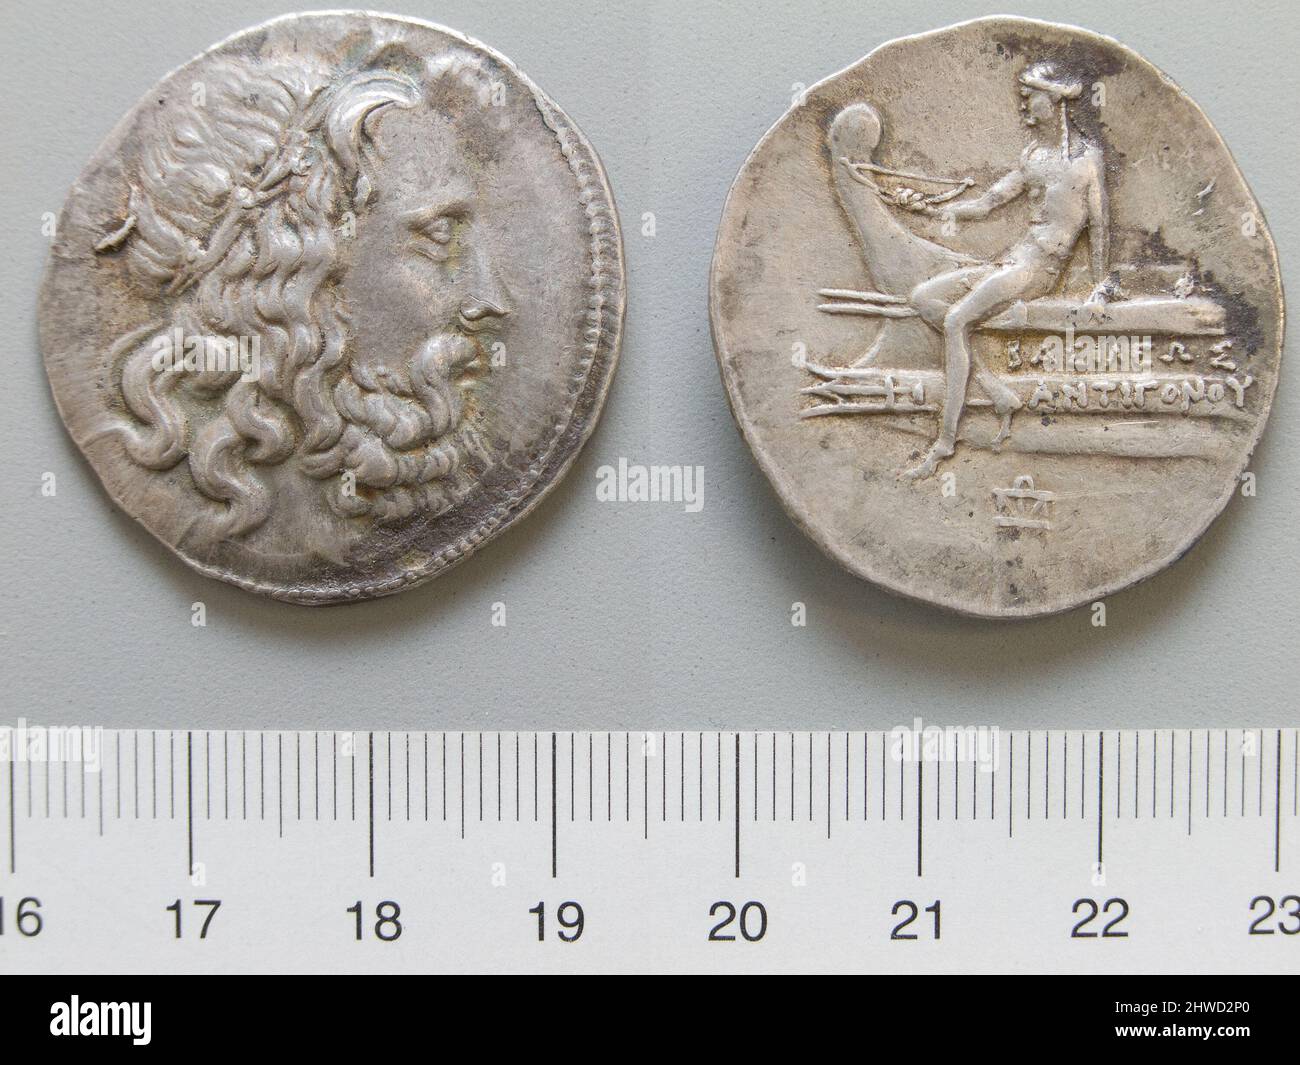 Coin of Antigonus III Doson from Macedonia. Ruler: Antigonus III Doson, King of Macedonia, 263–221 B.C., ruled 229–221 B.C. Mint: Macedonia Stock Photo